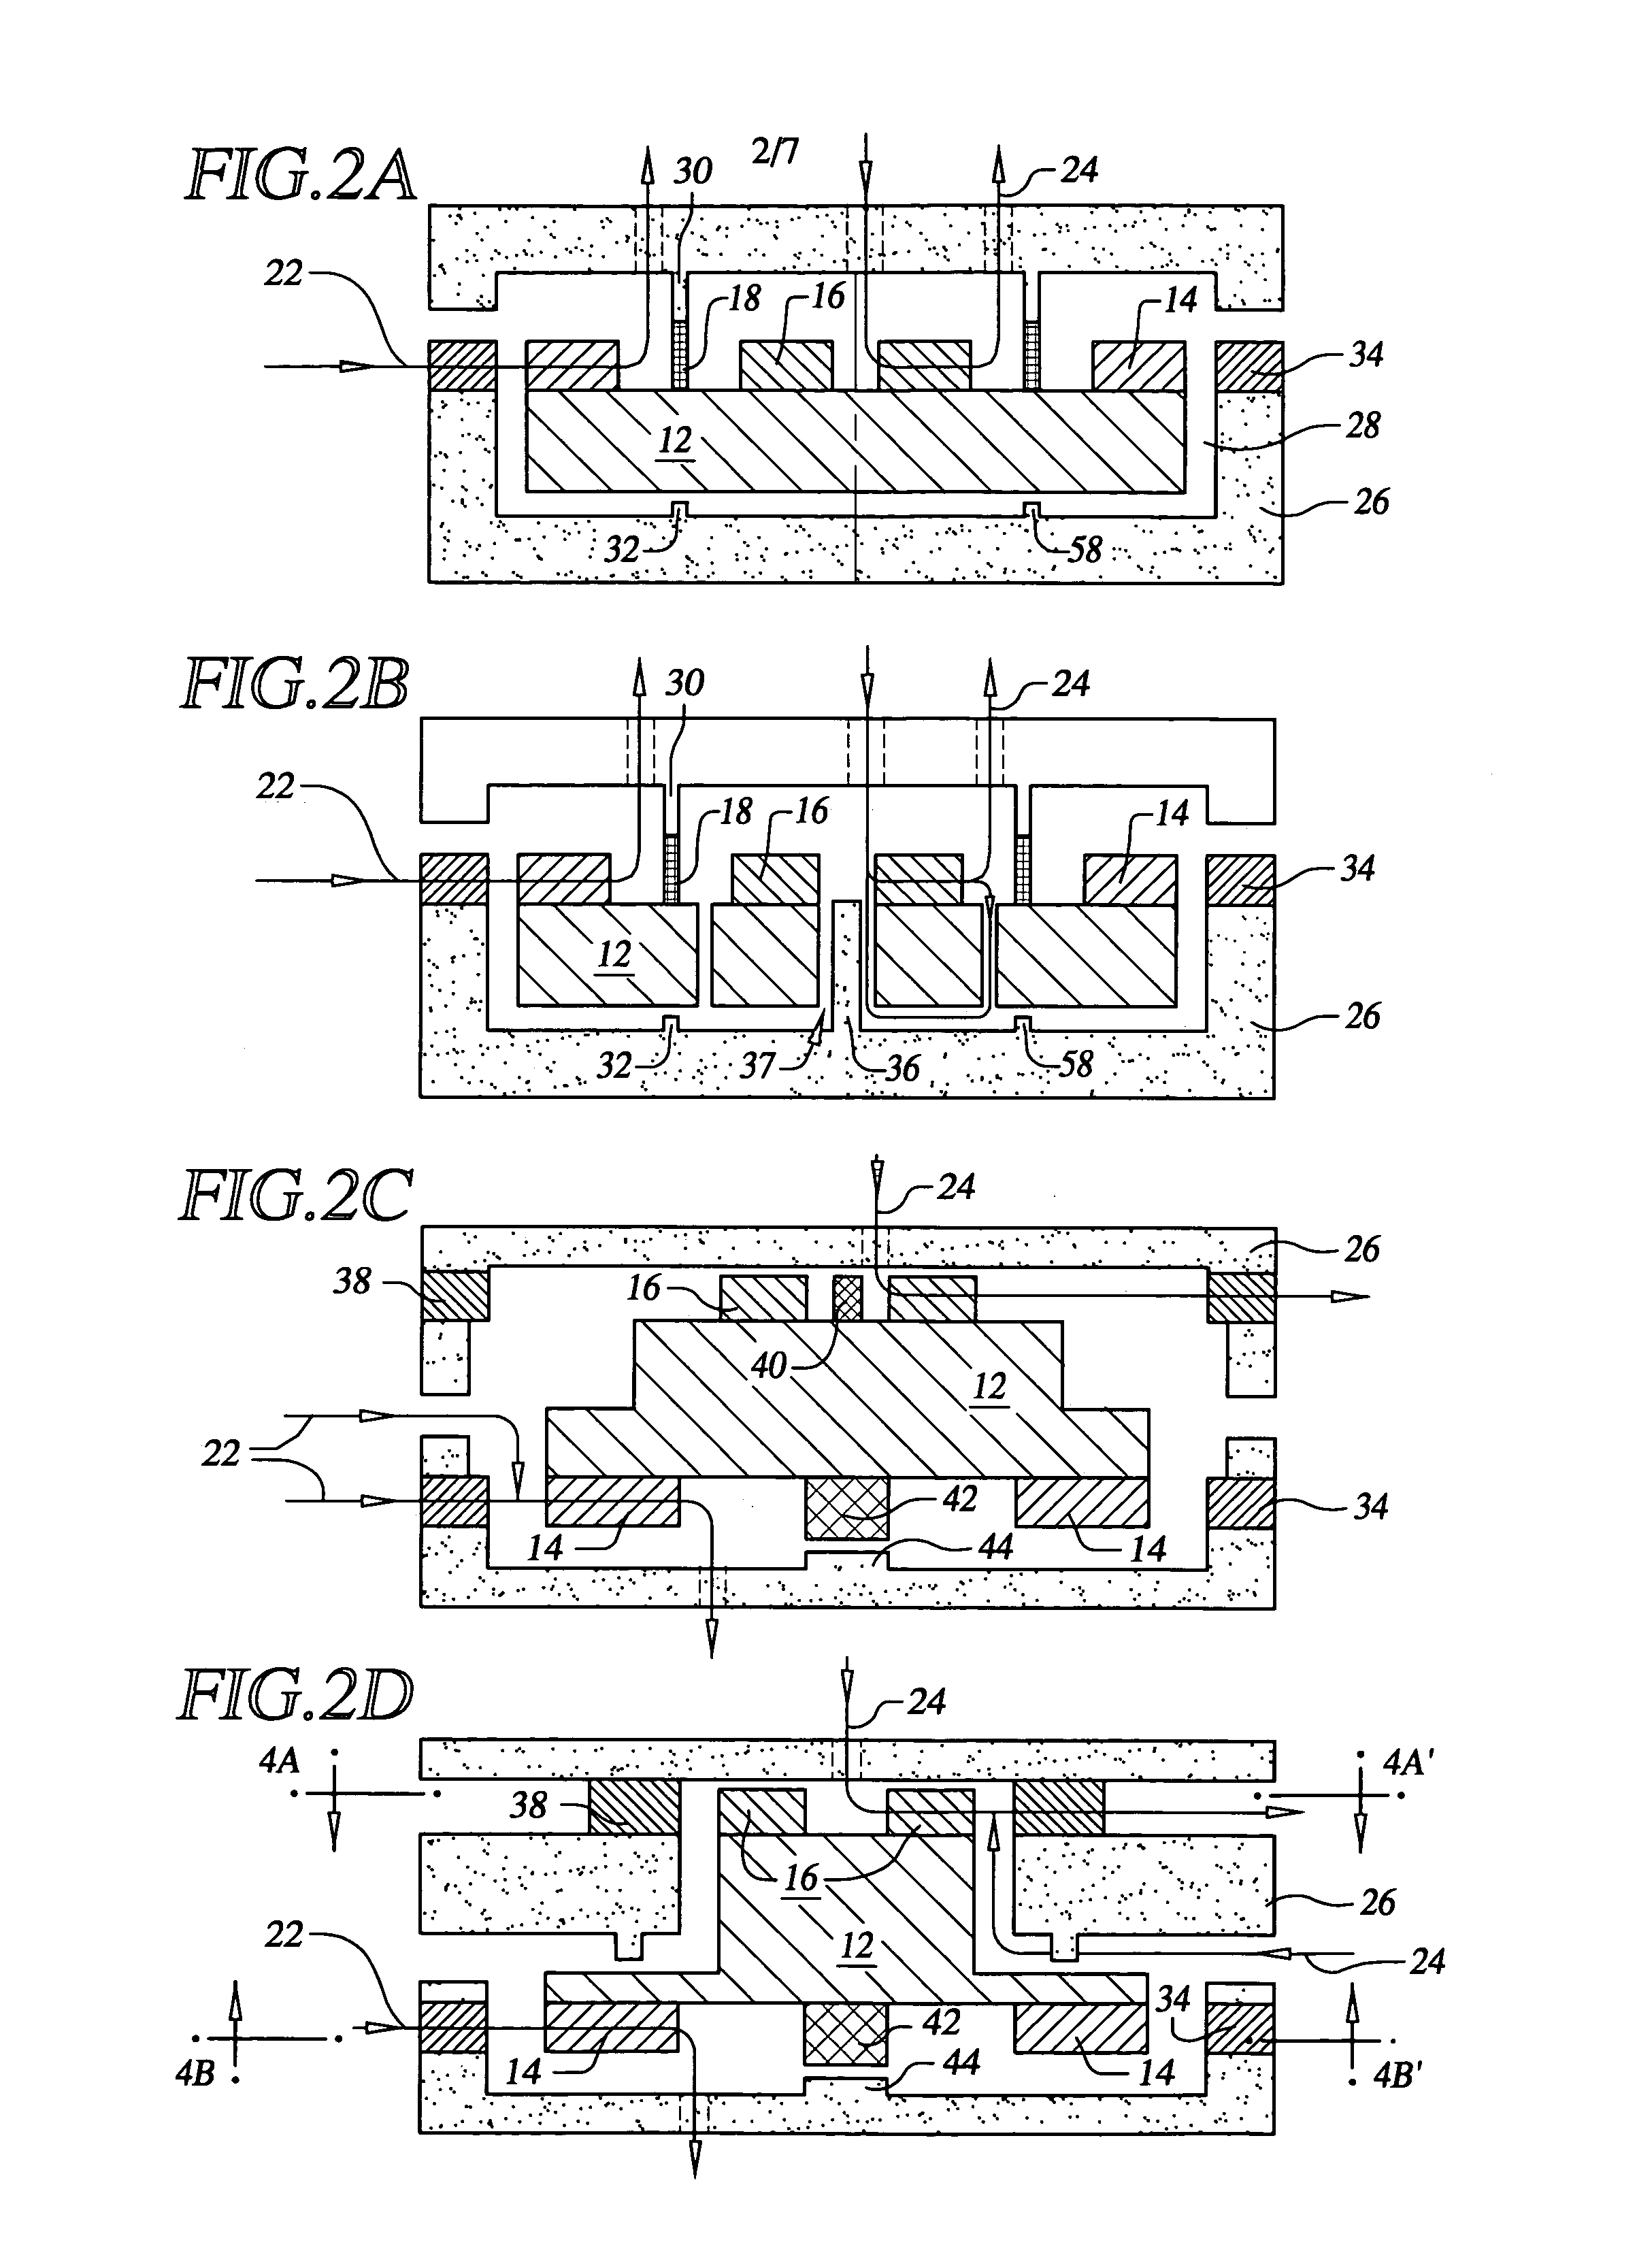 Planar turbopump assembly